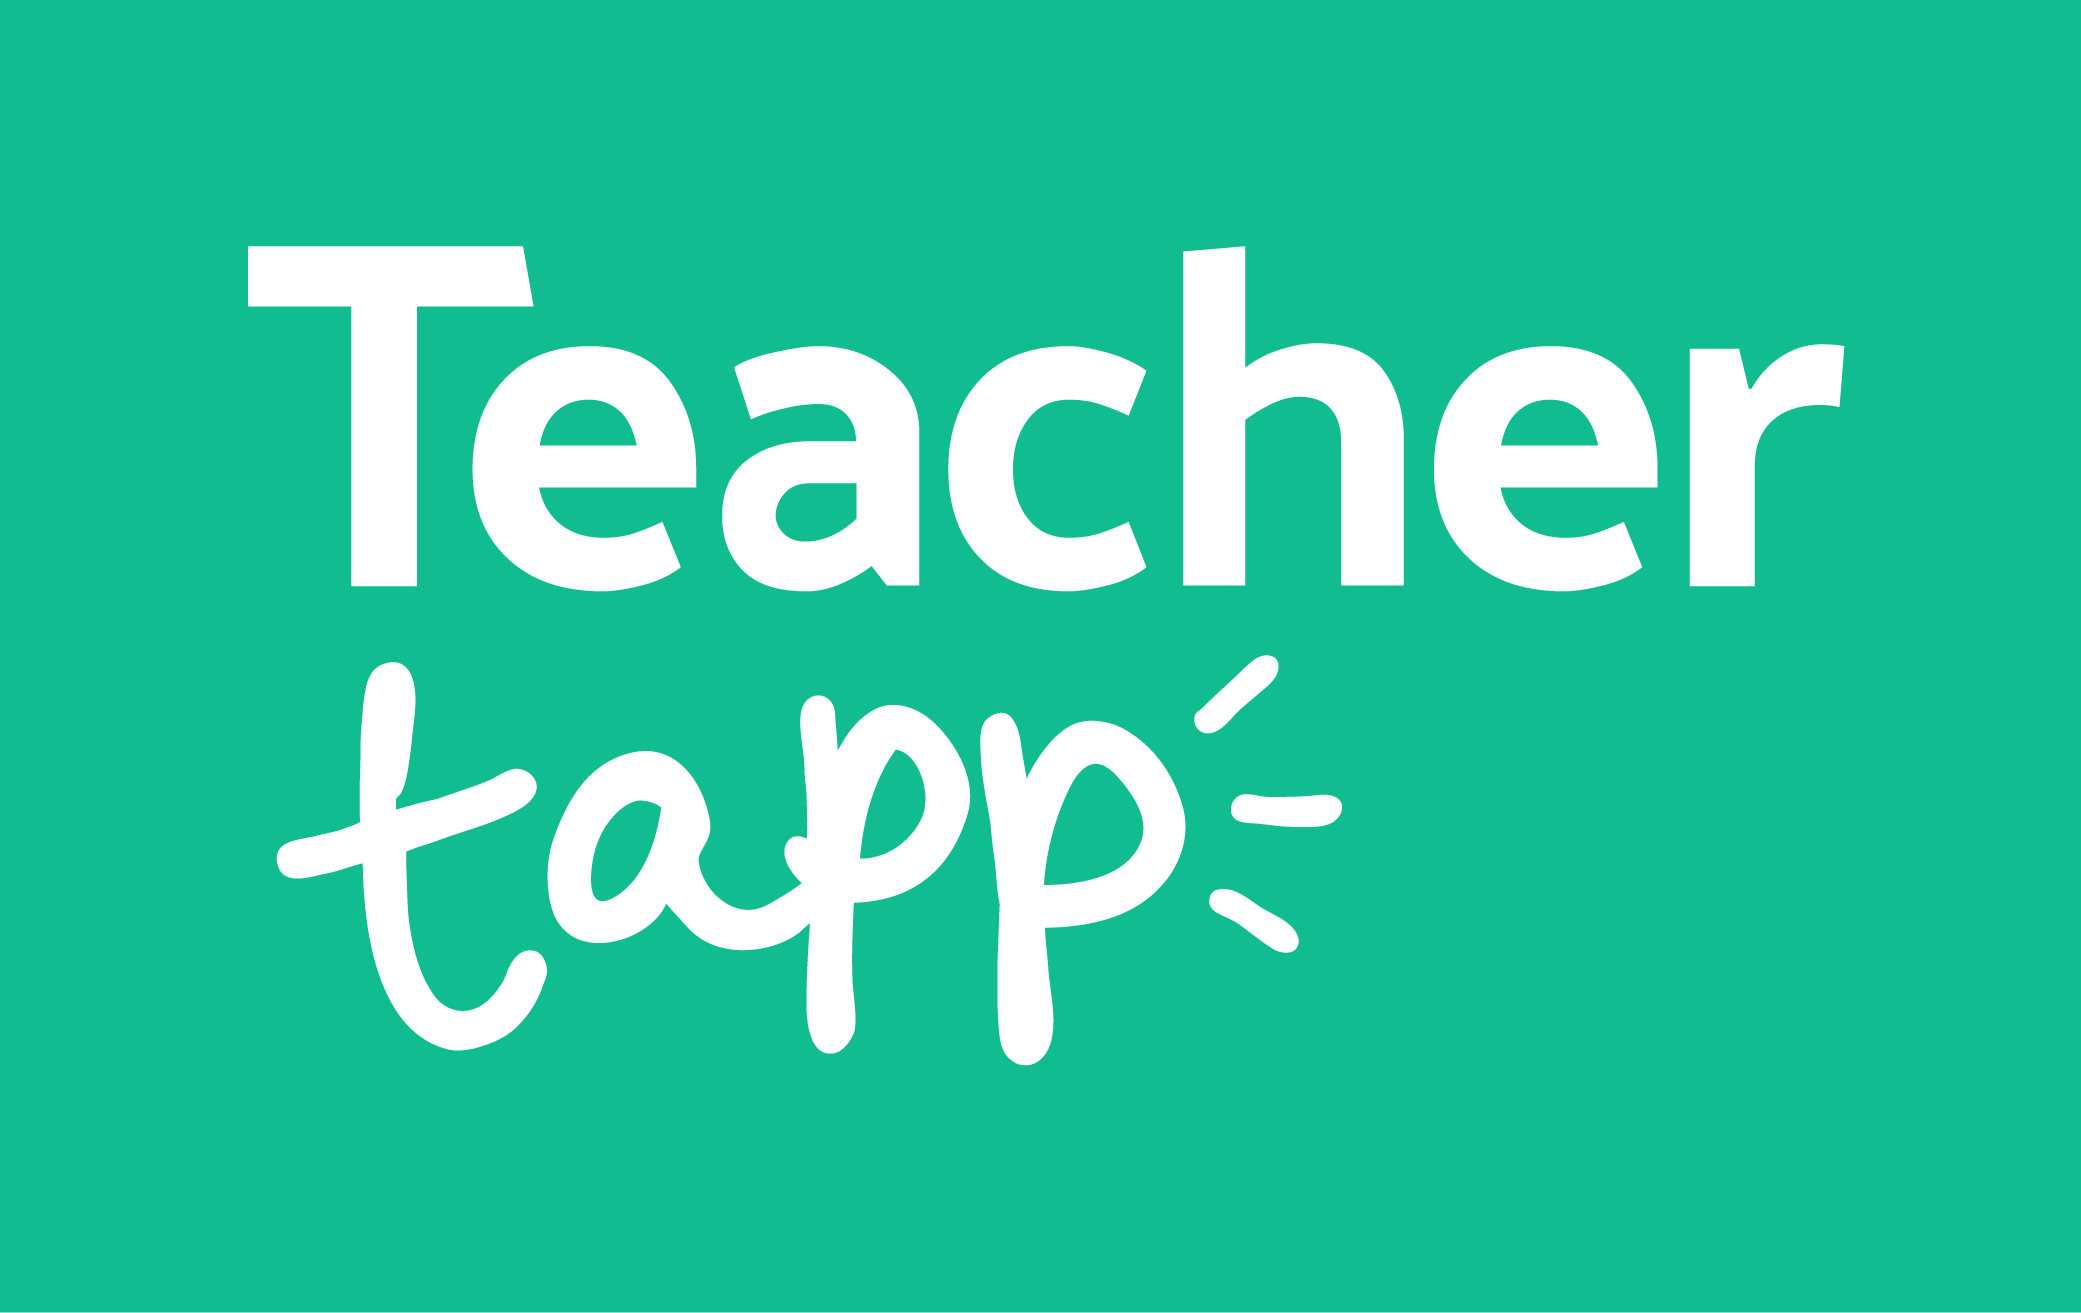 Teacher Tapp